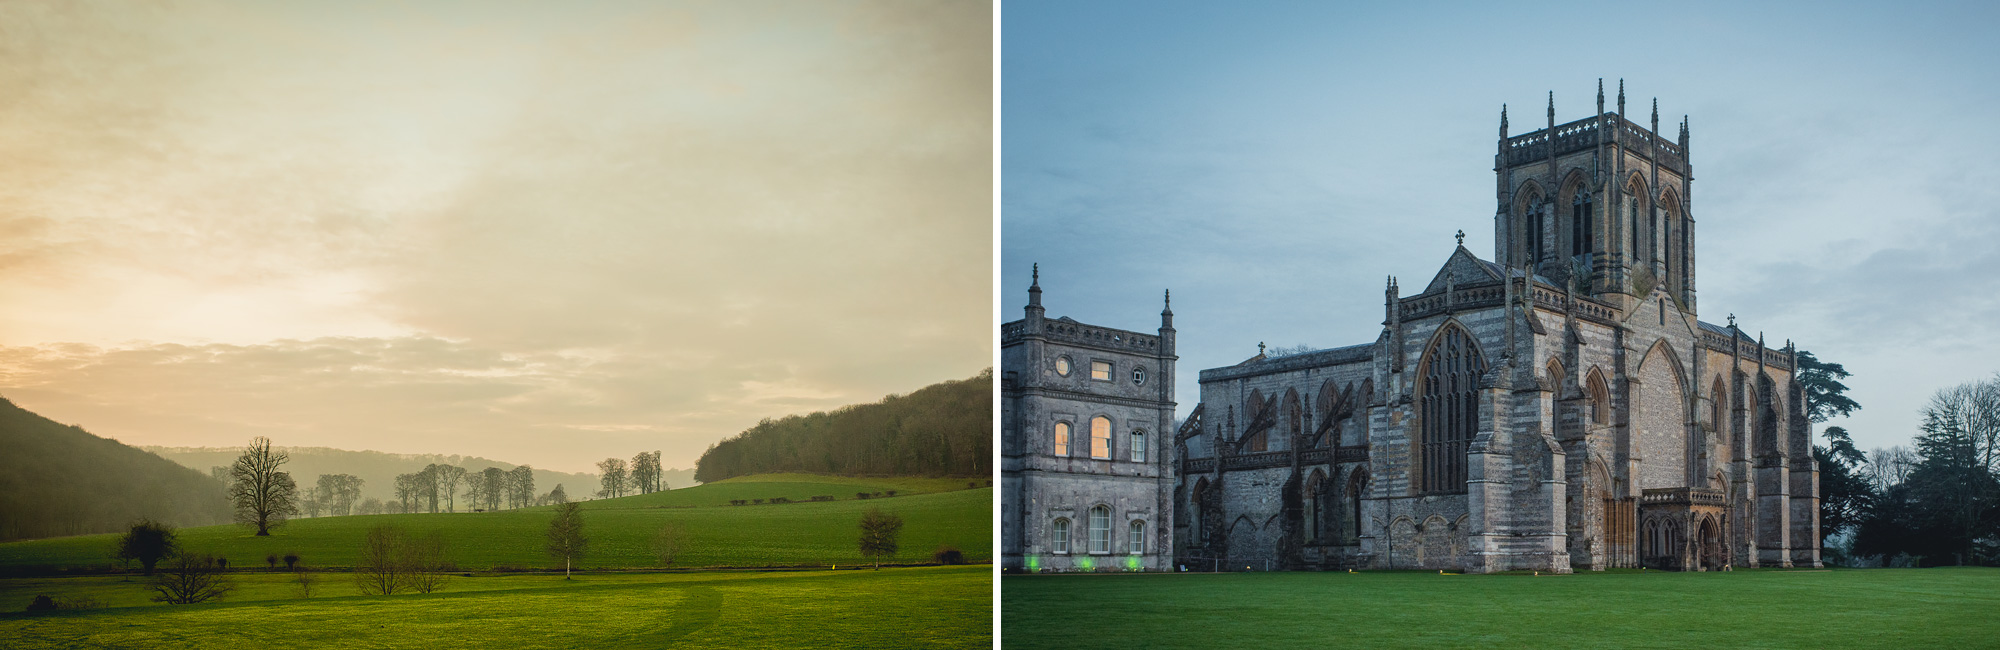 wedding-photographer-milton-abbey-landscape.jpg